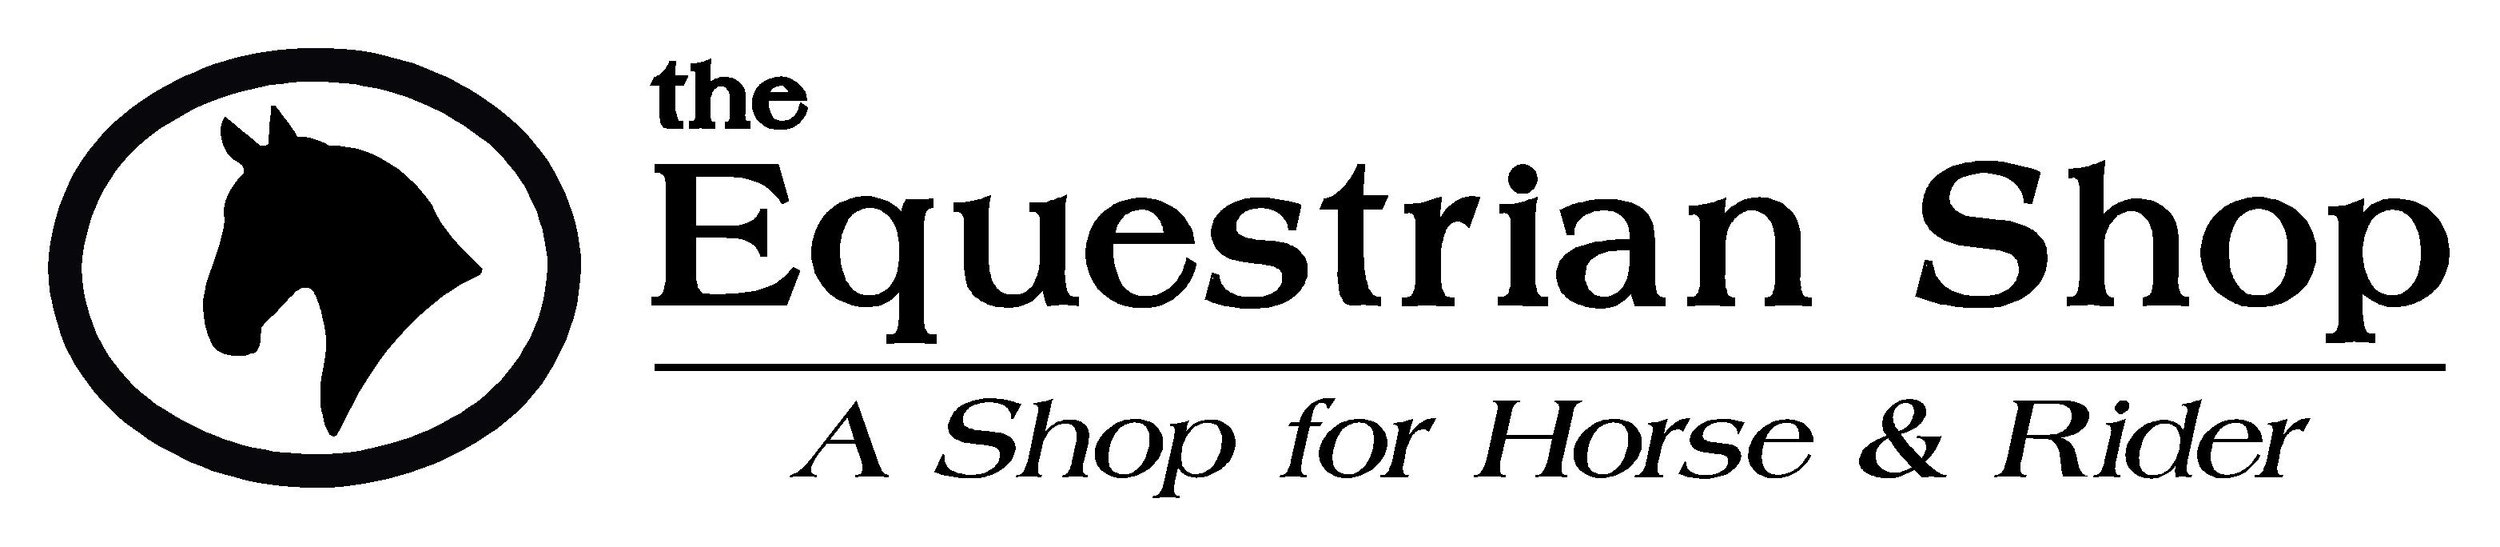 the equestrian shop logo.jpg